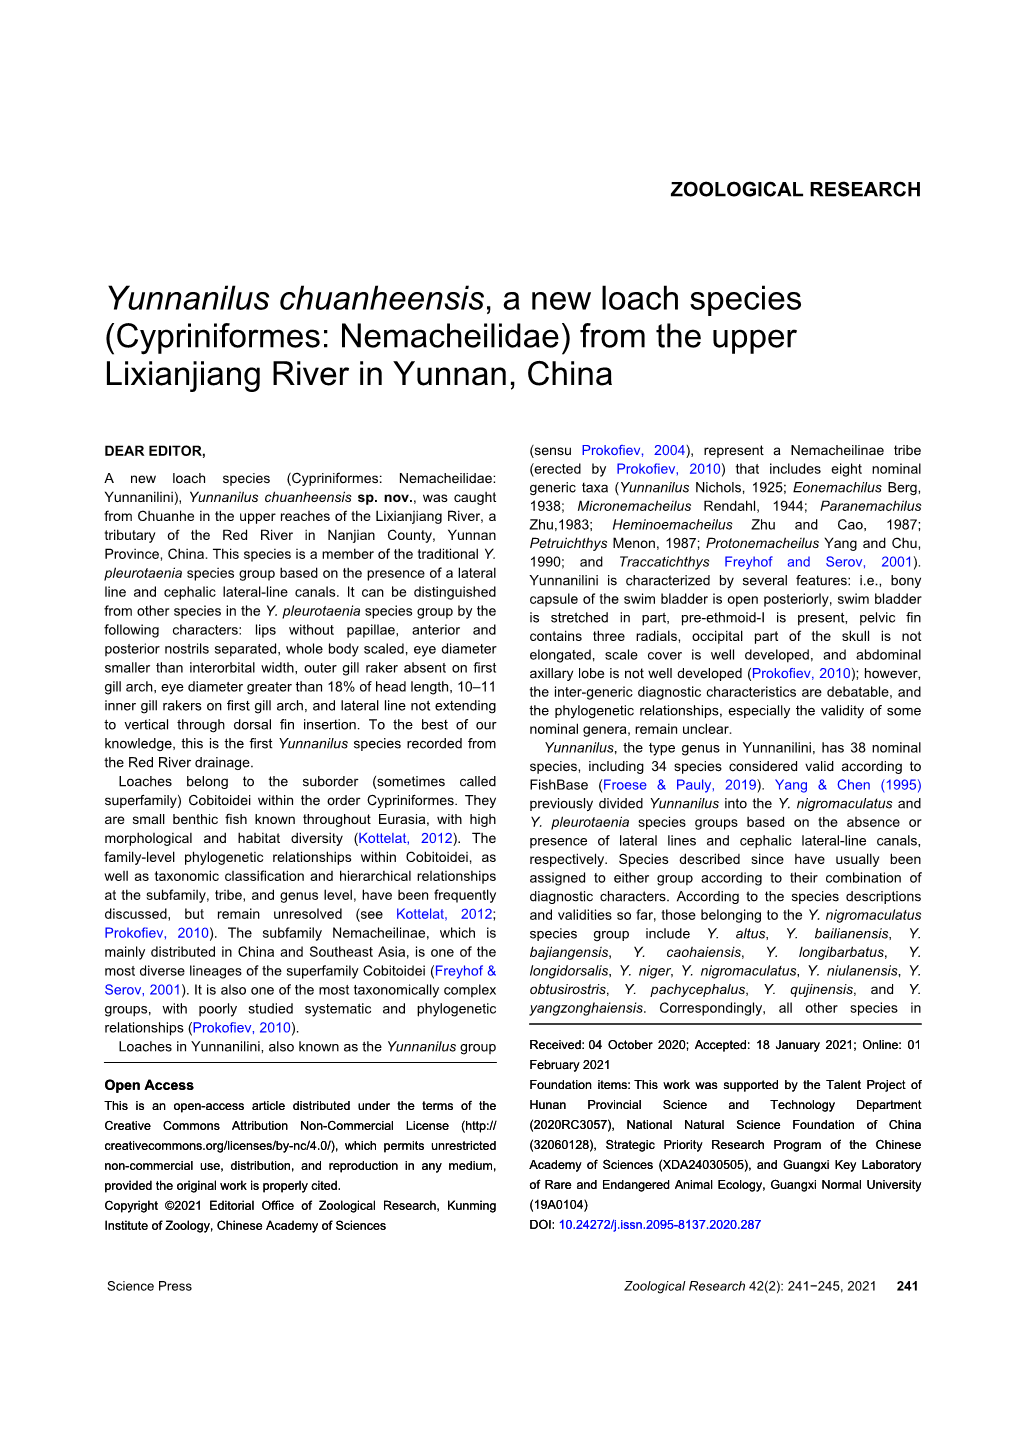 Yunnanilus Chuanheensis, a New Loach Species (Cypriniformes: Nemacheilidae) from the Upper Lixianjiang River in Yunnan, China